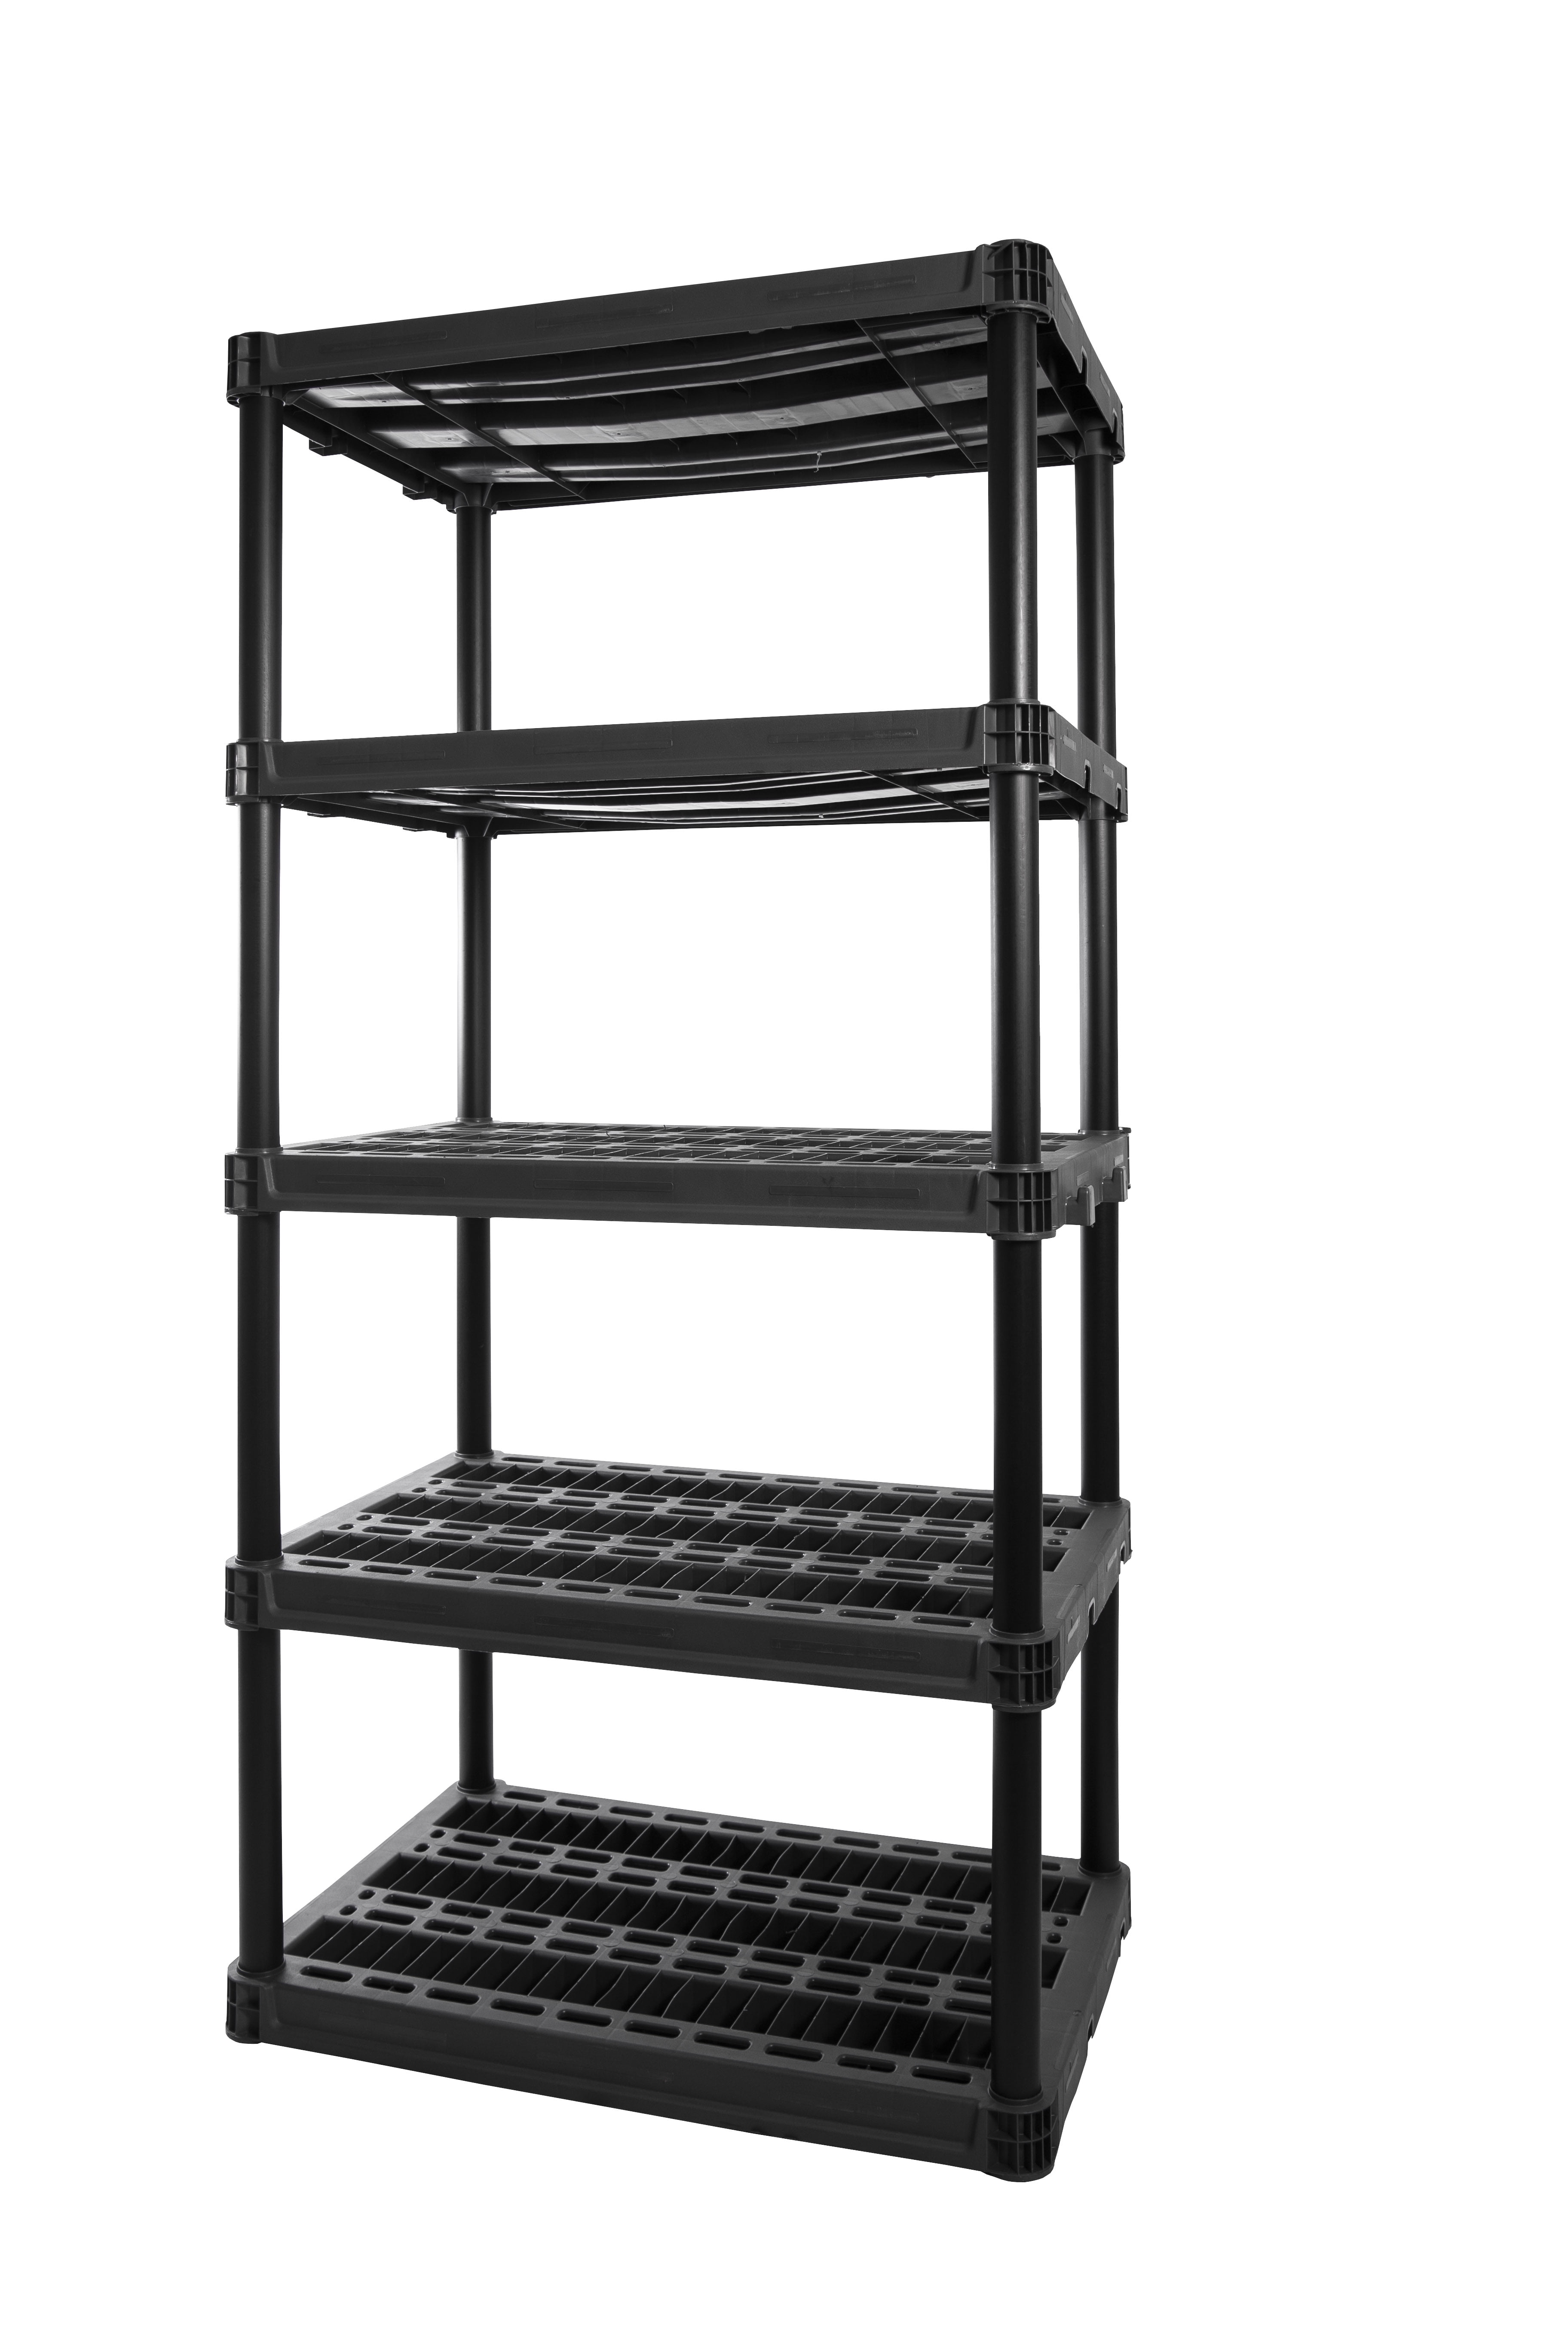 Plano 5-Shelf Heavy Duty Plastic Storage Shelves, 73” x 36” x 18”, 750